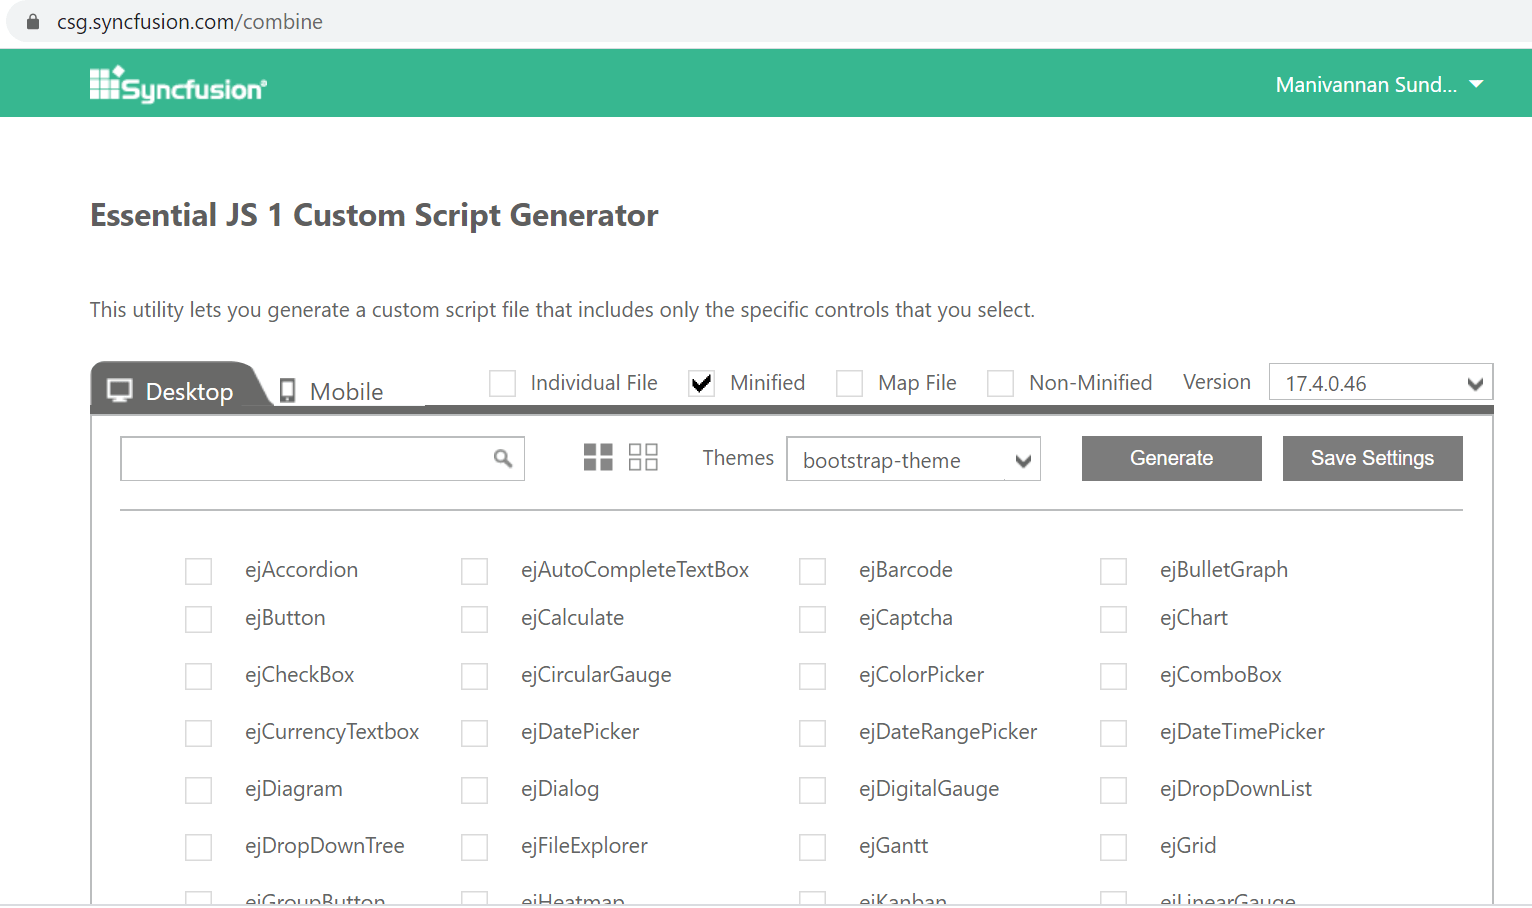 Custom script generator for Essential JS 1